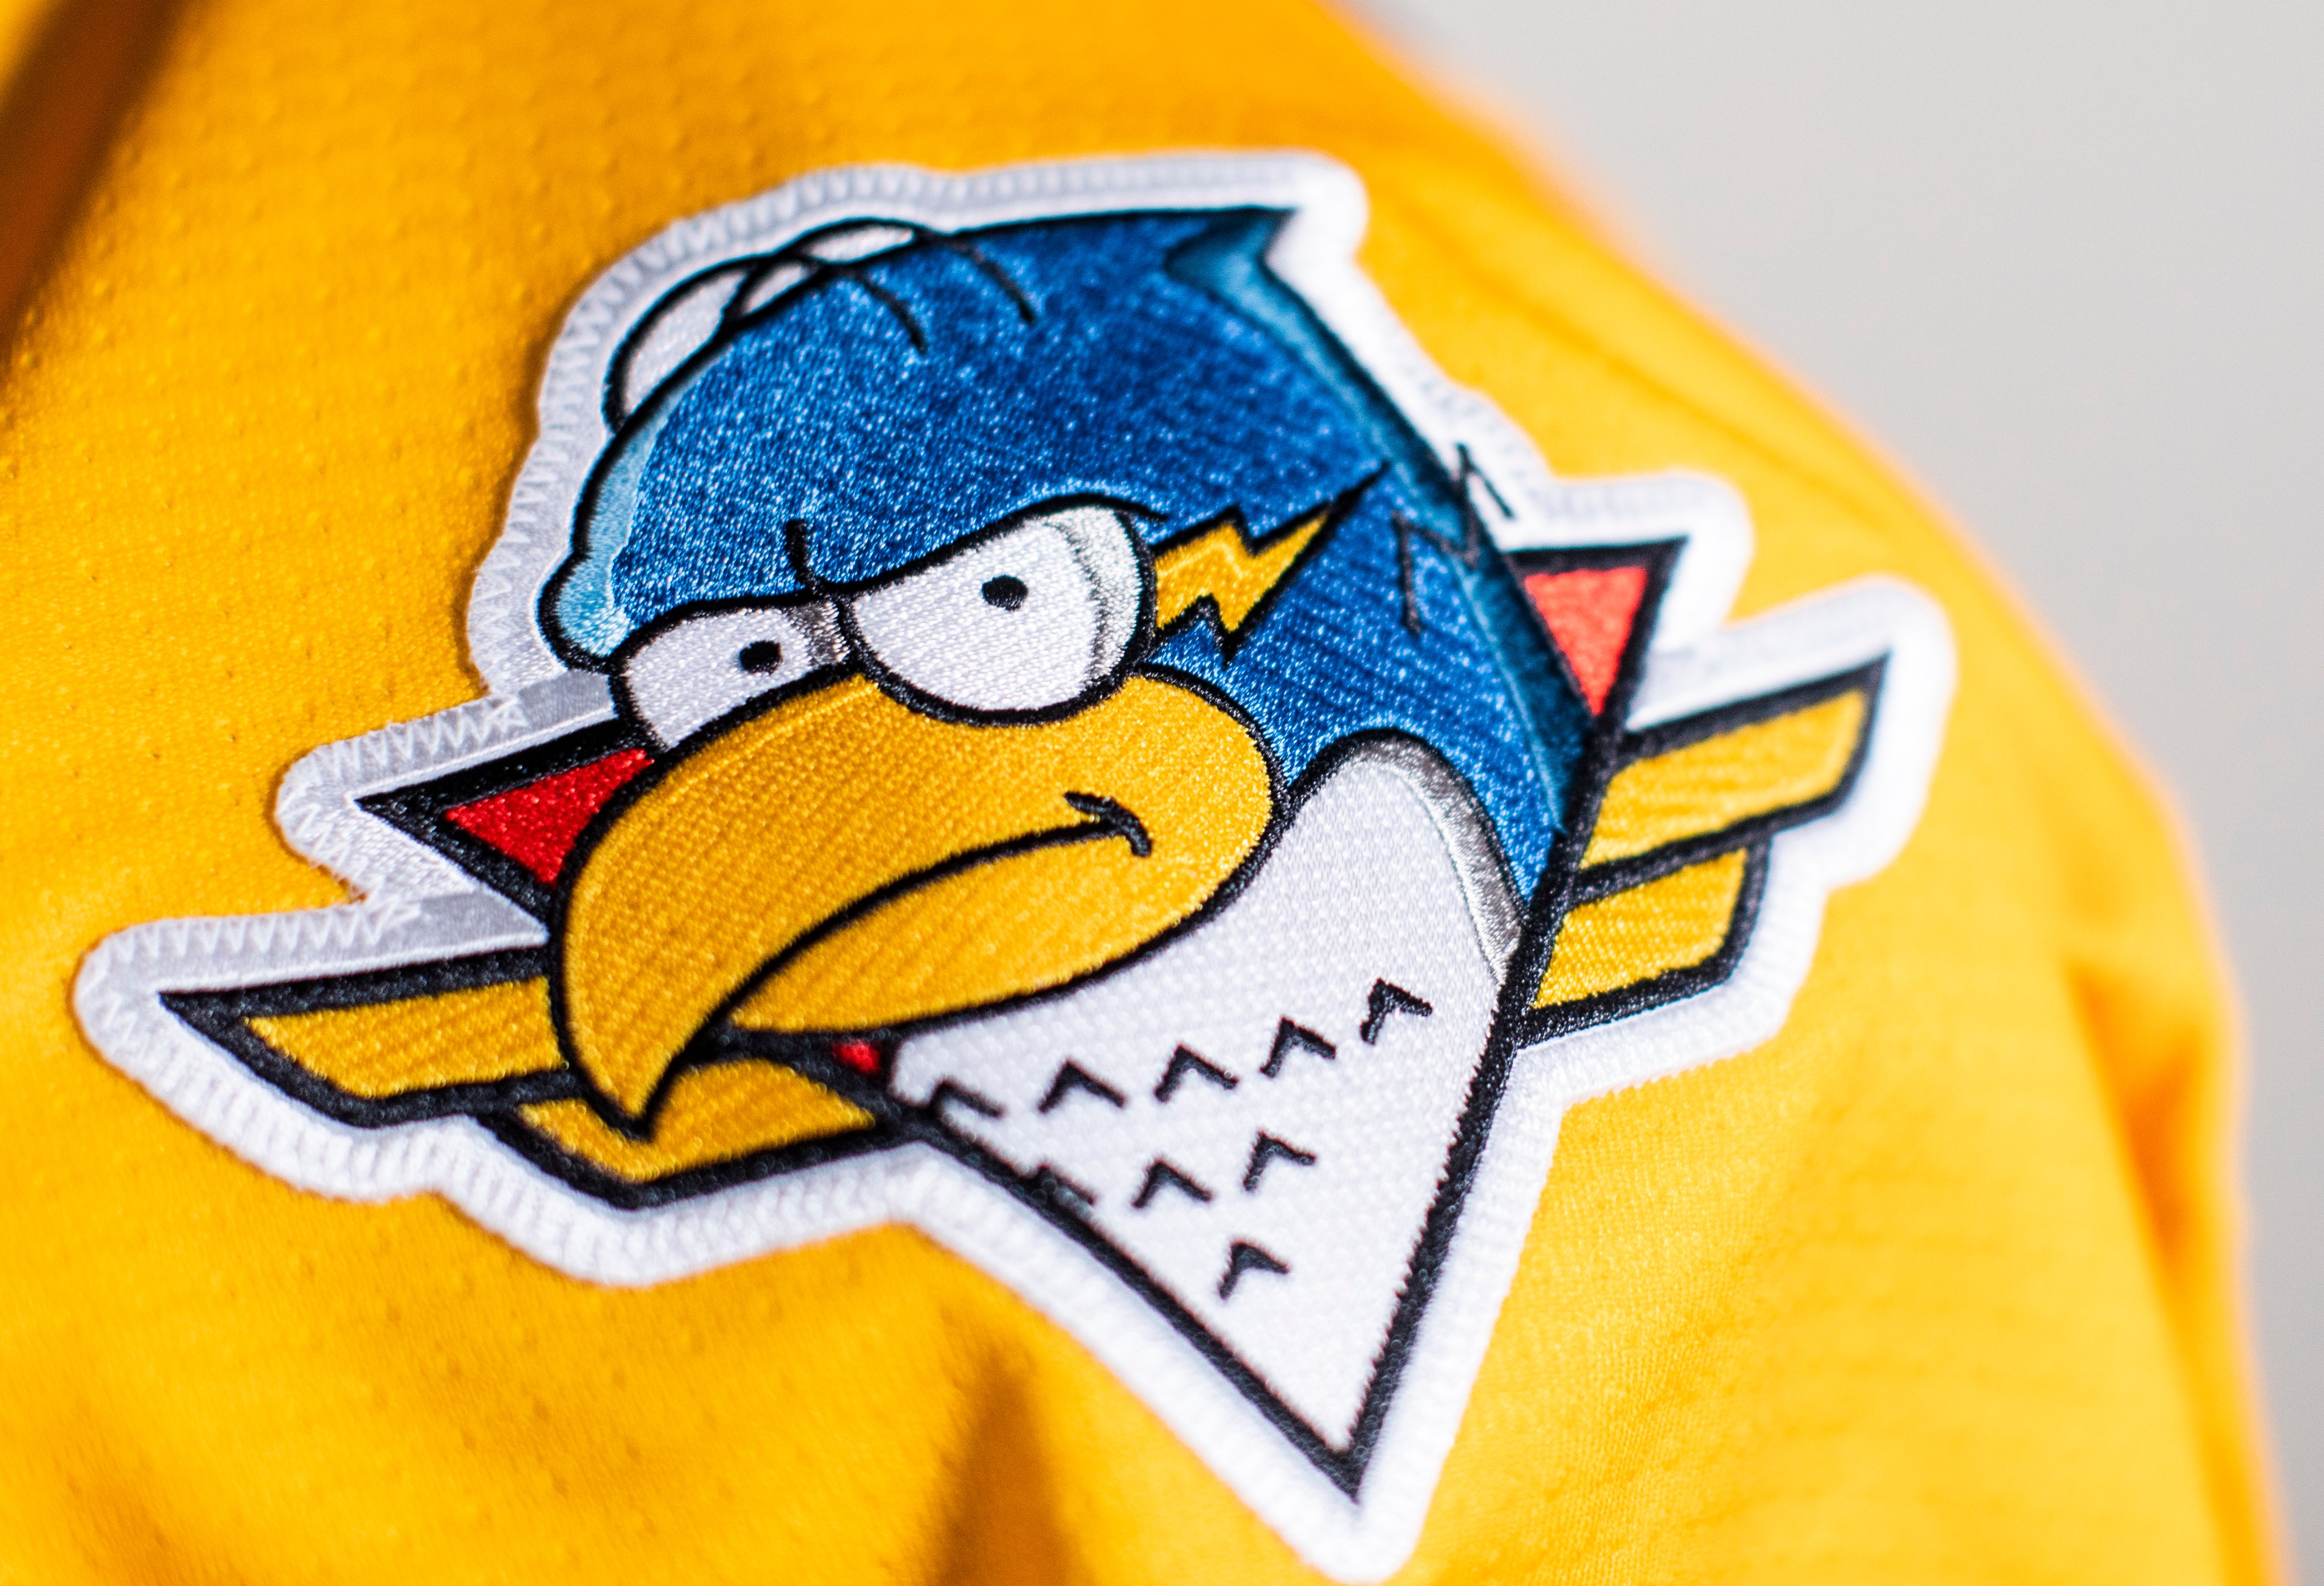 Springfield Thunderbirds on X: These Ice-O-Topes jerseys are